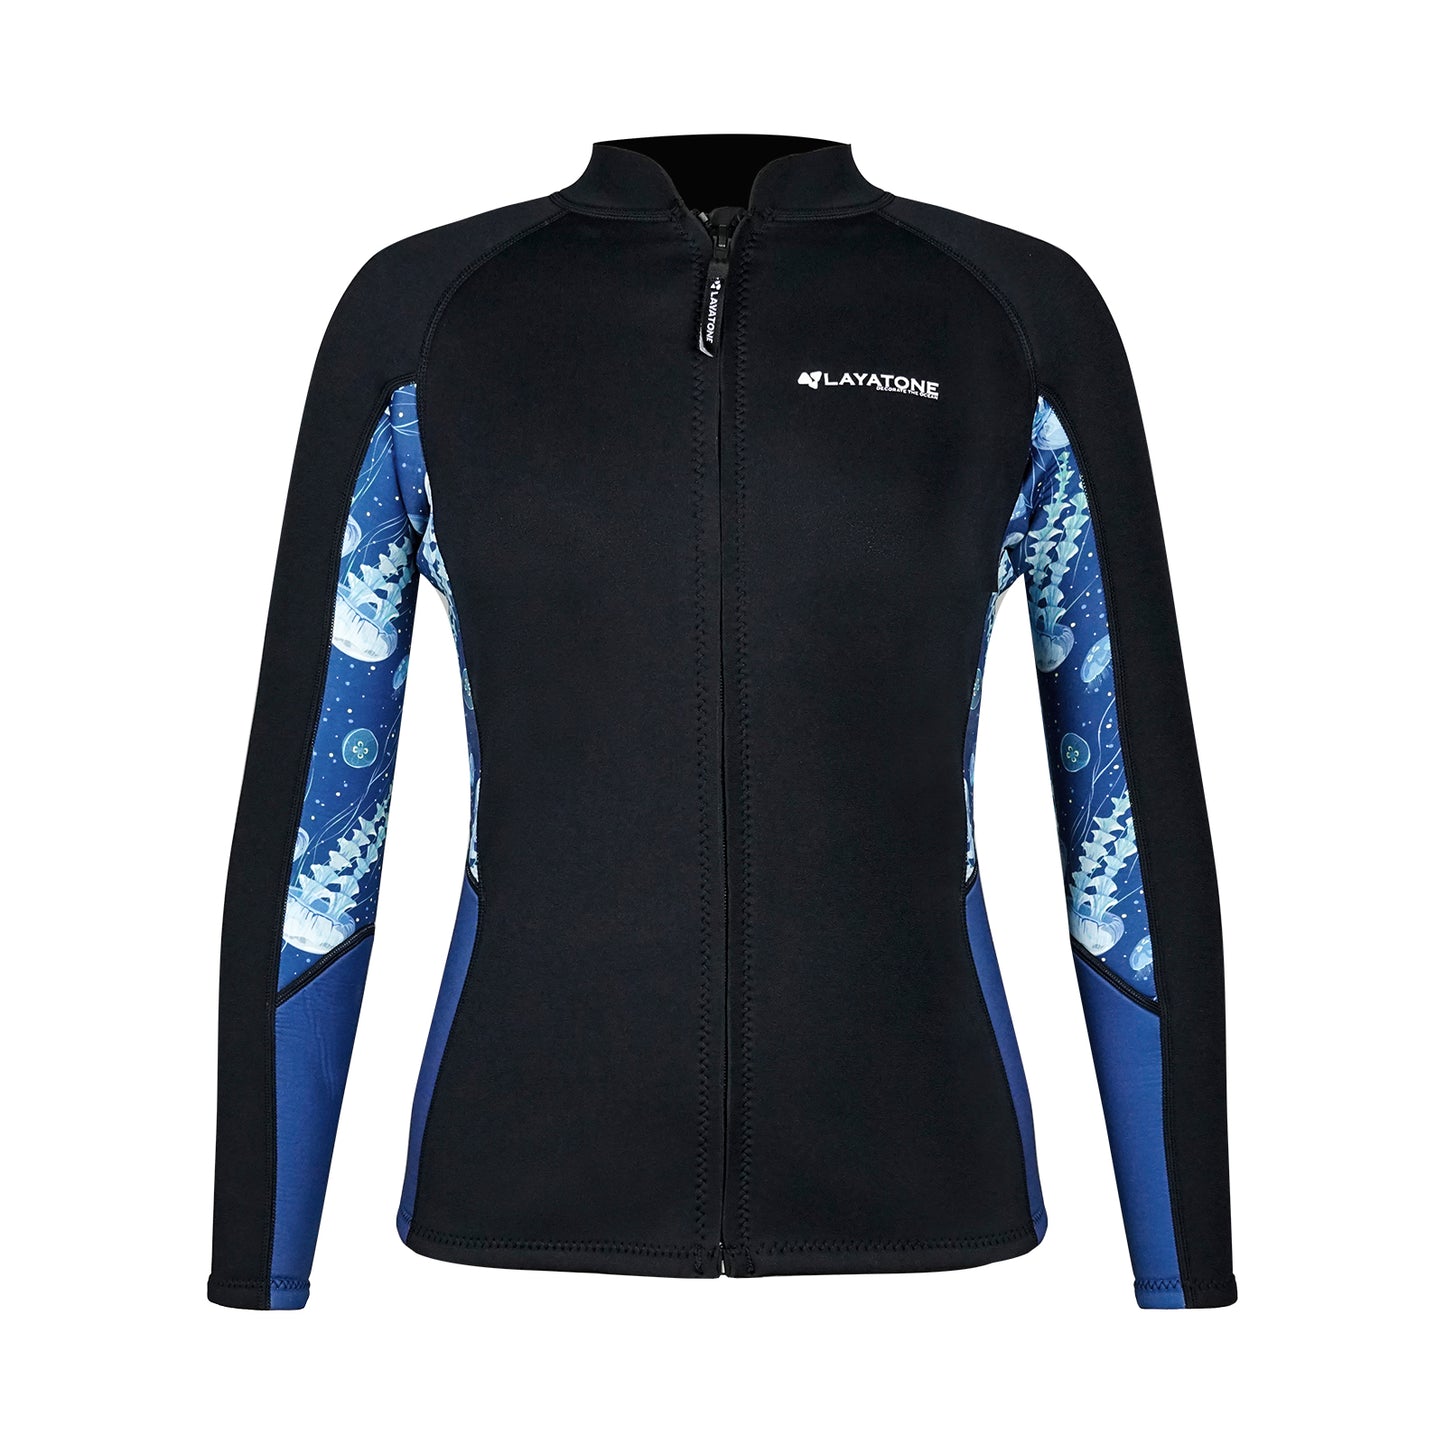 layatone Wetsuit Top Women 3mm Neoprene Wetsuits Jacket,Front Zipper Long Sleeves Diving Suit for Swimming,Snorkeling,Scuba Diving,Surfing